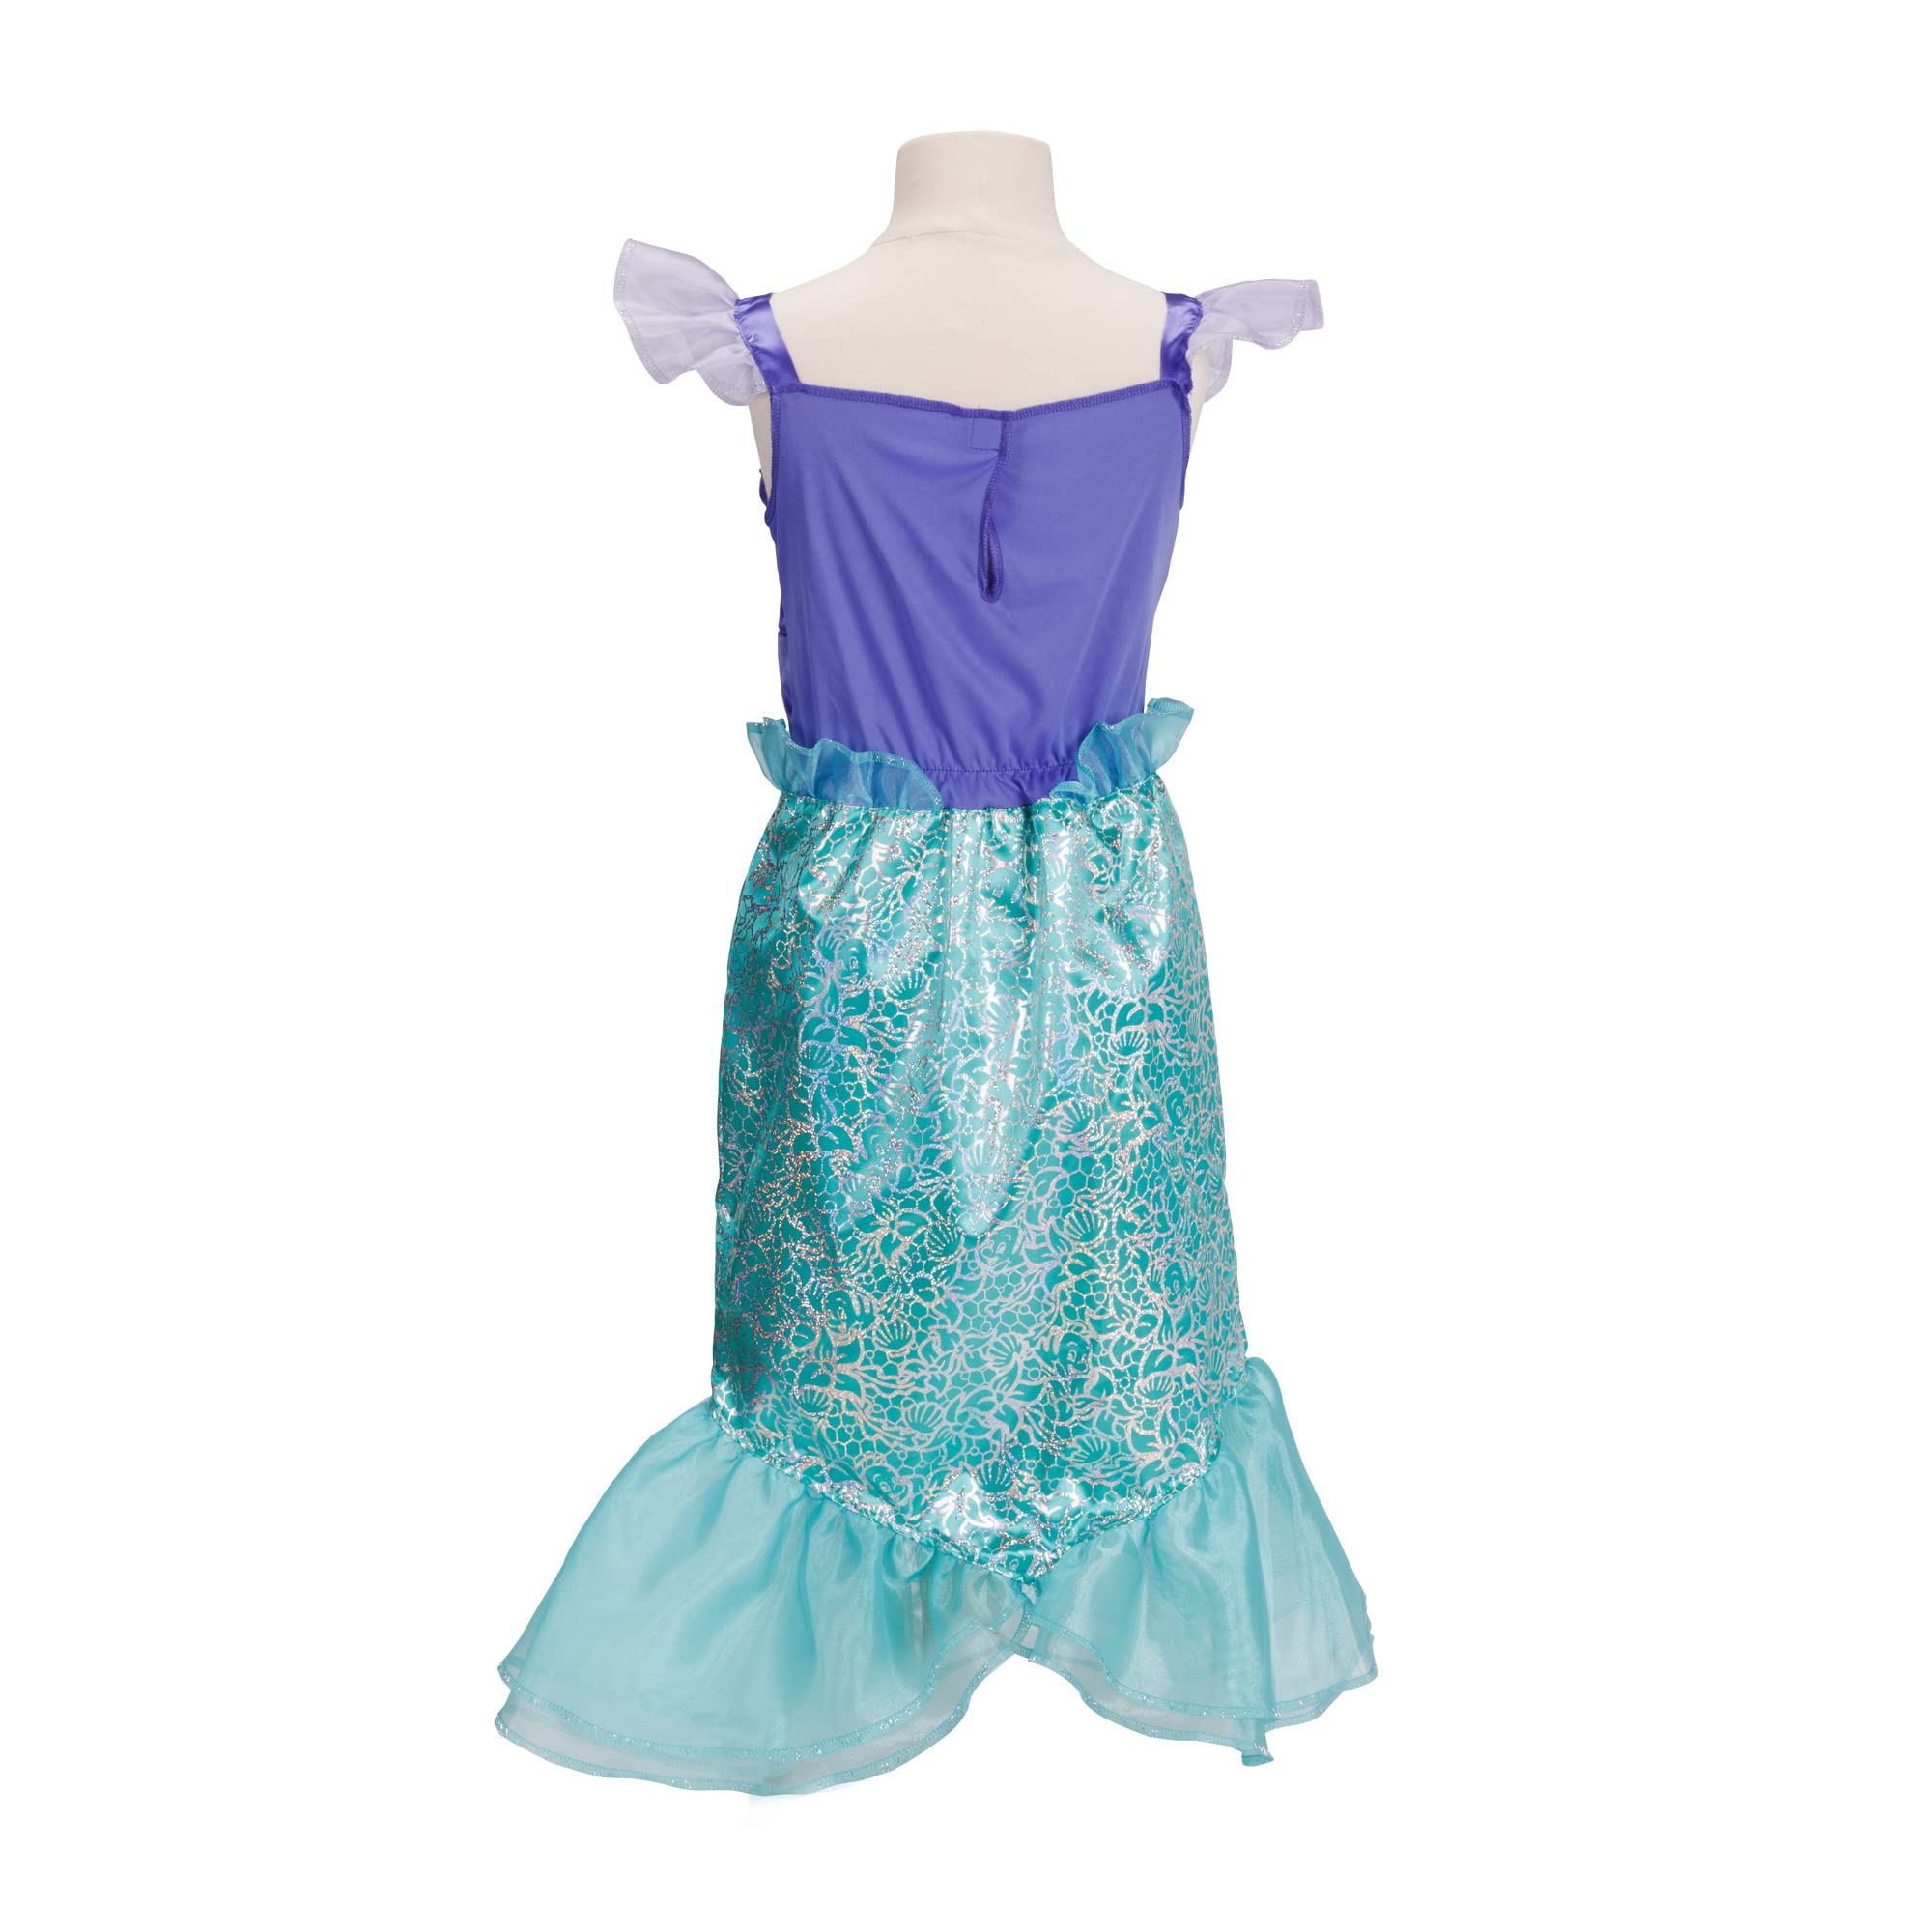 Disney Princess Ariel Dress Beautiful Holofoil Print with Platinum Finish, Celebrate Disney 100 Years of Wonder! Child Size 4-6X